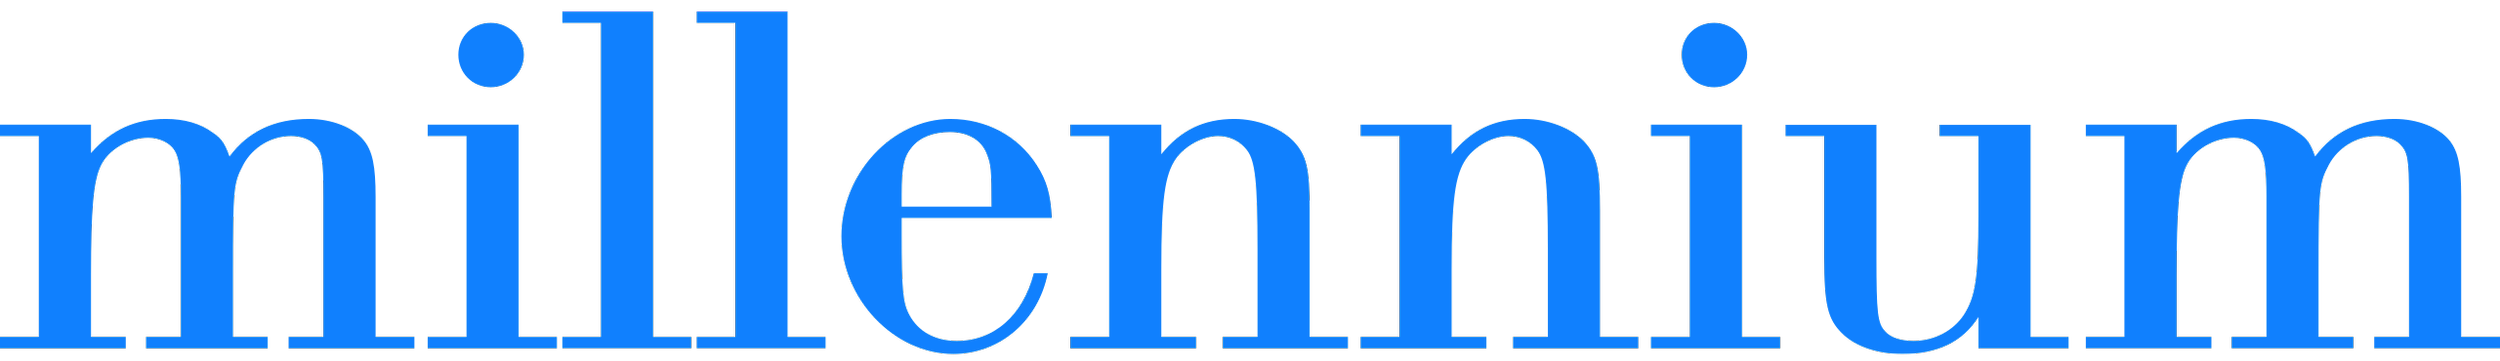 Millennium_logo.svg.png